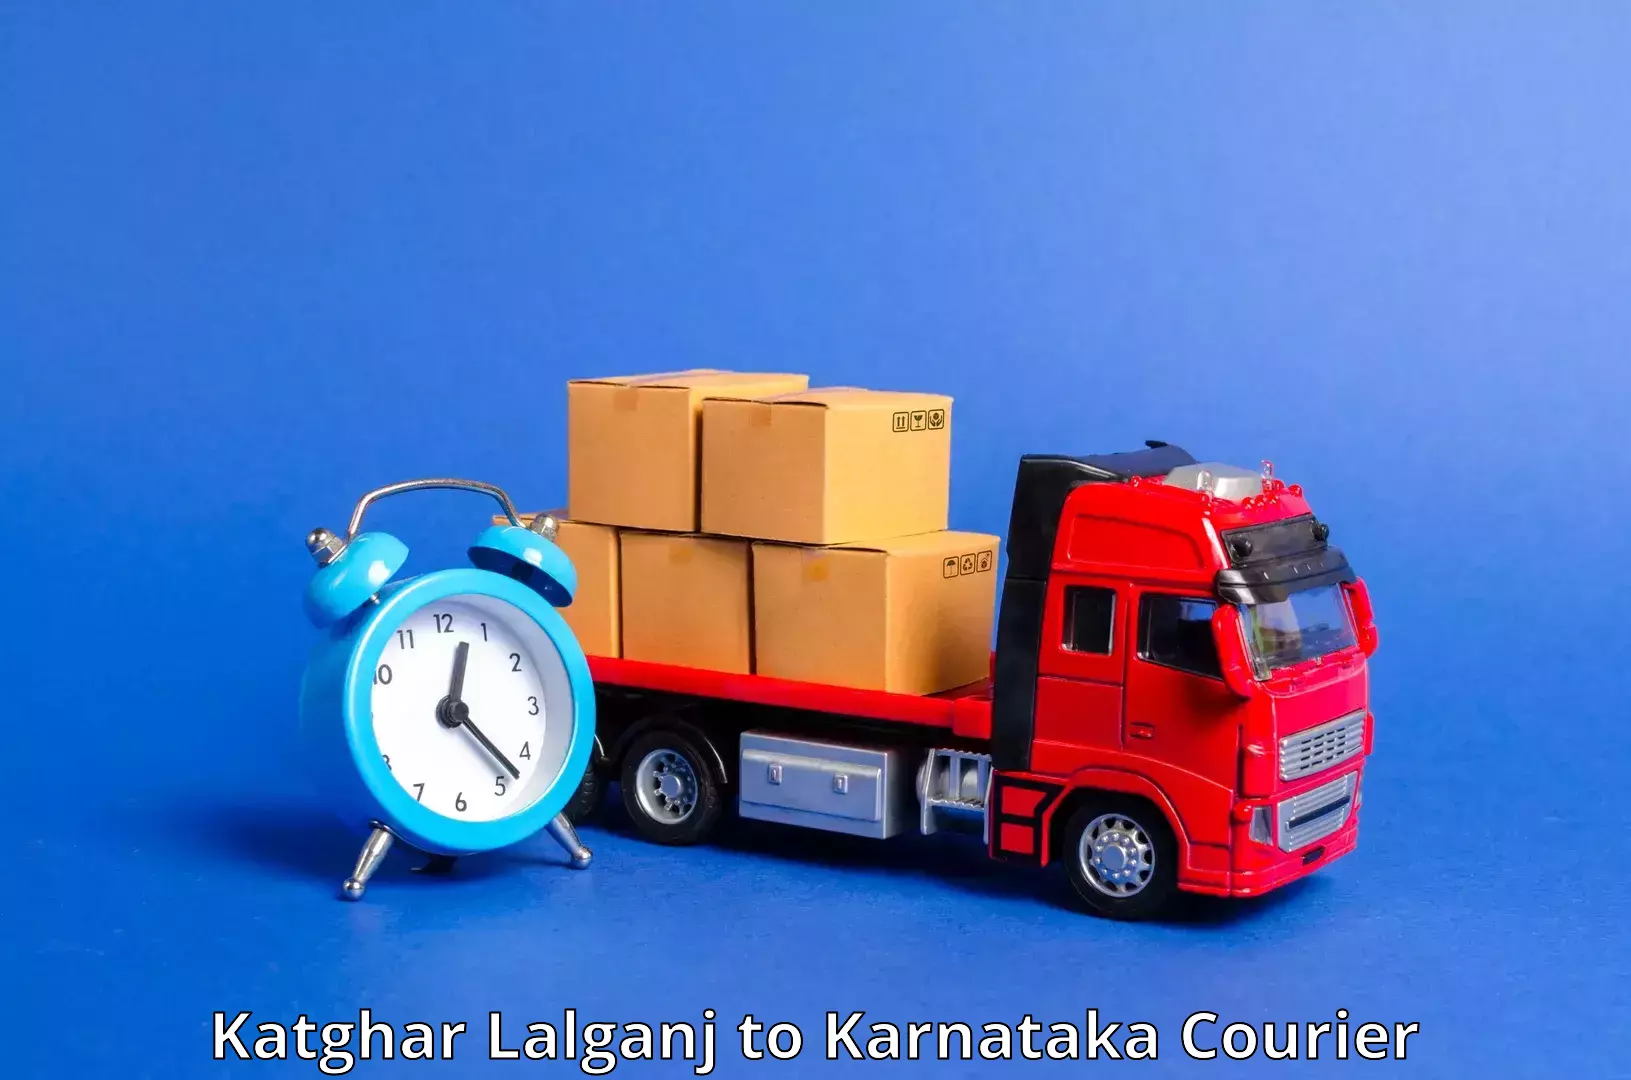 24/7 courier service Katghar Lalganj to Davangere